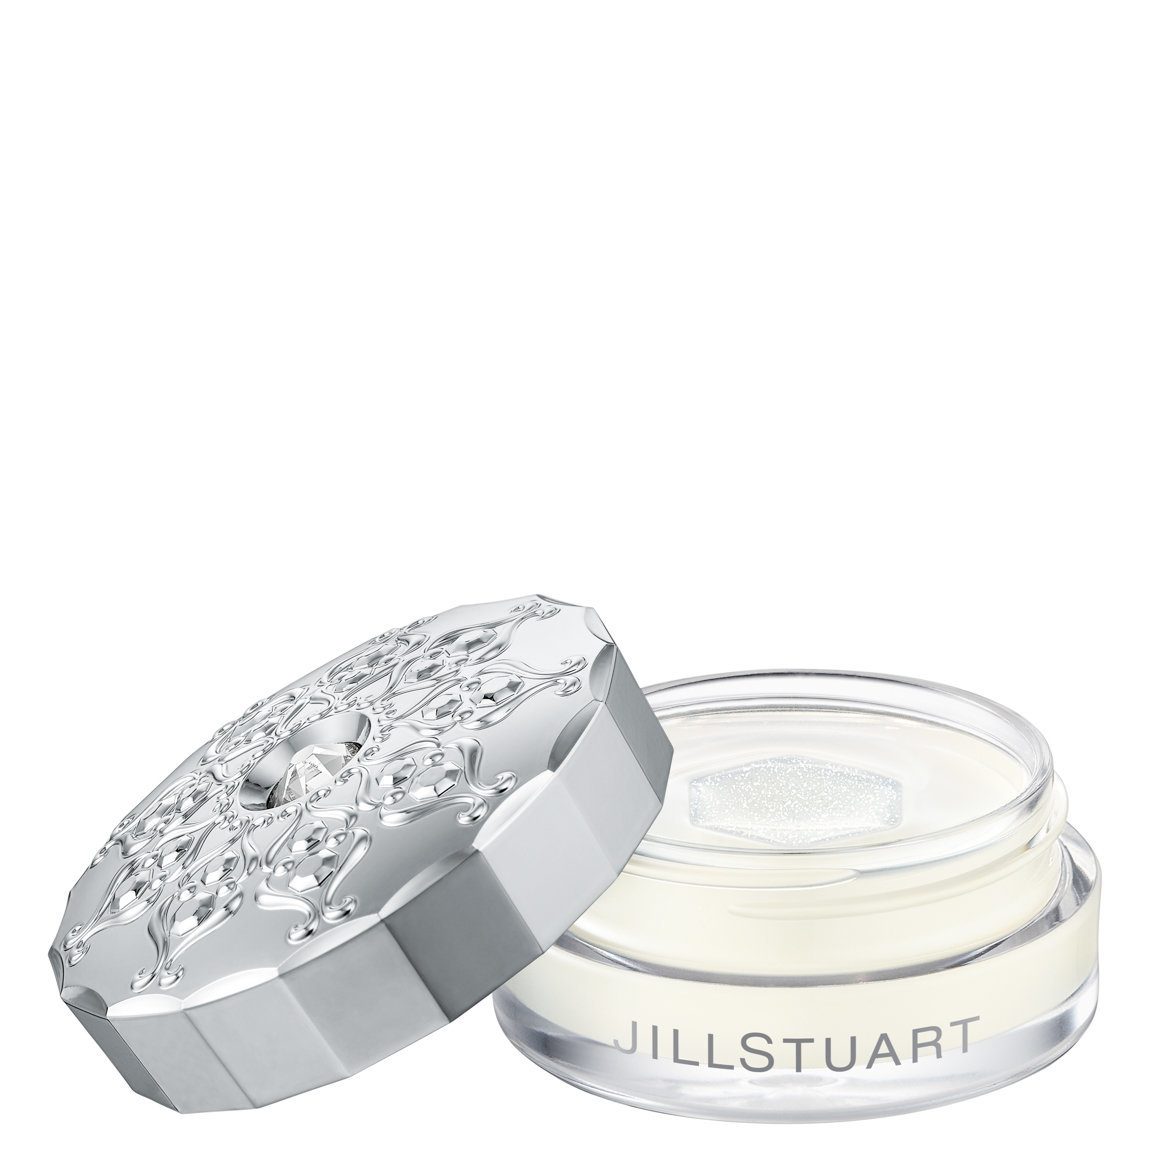 JILL STUART Beauty Diamond Glaze Lip Balm alternative view 1 - product swatch.